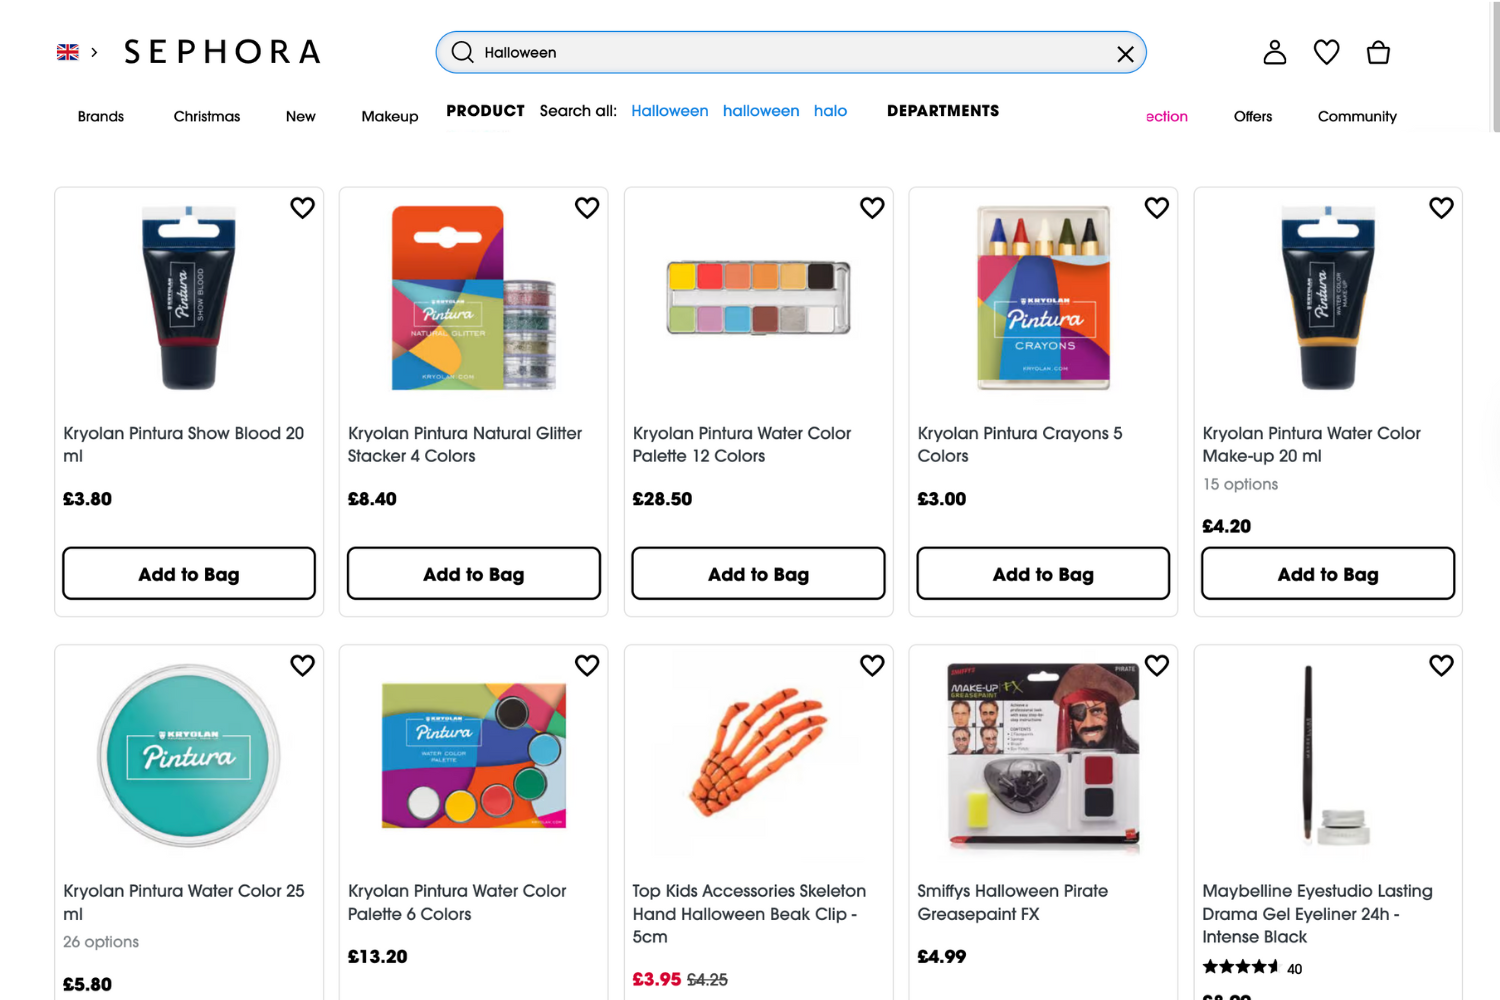 Sephora UK email marketing Halloween products